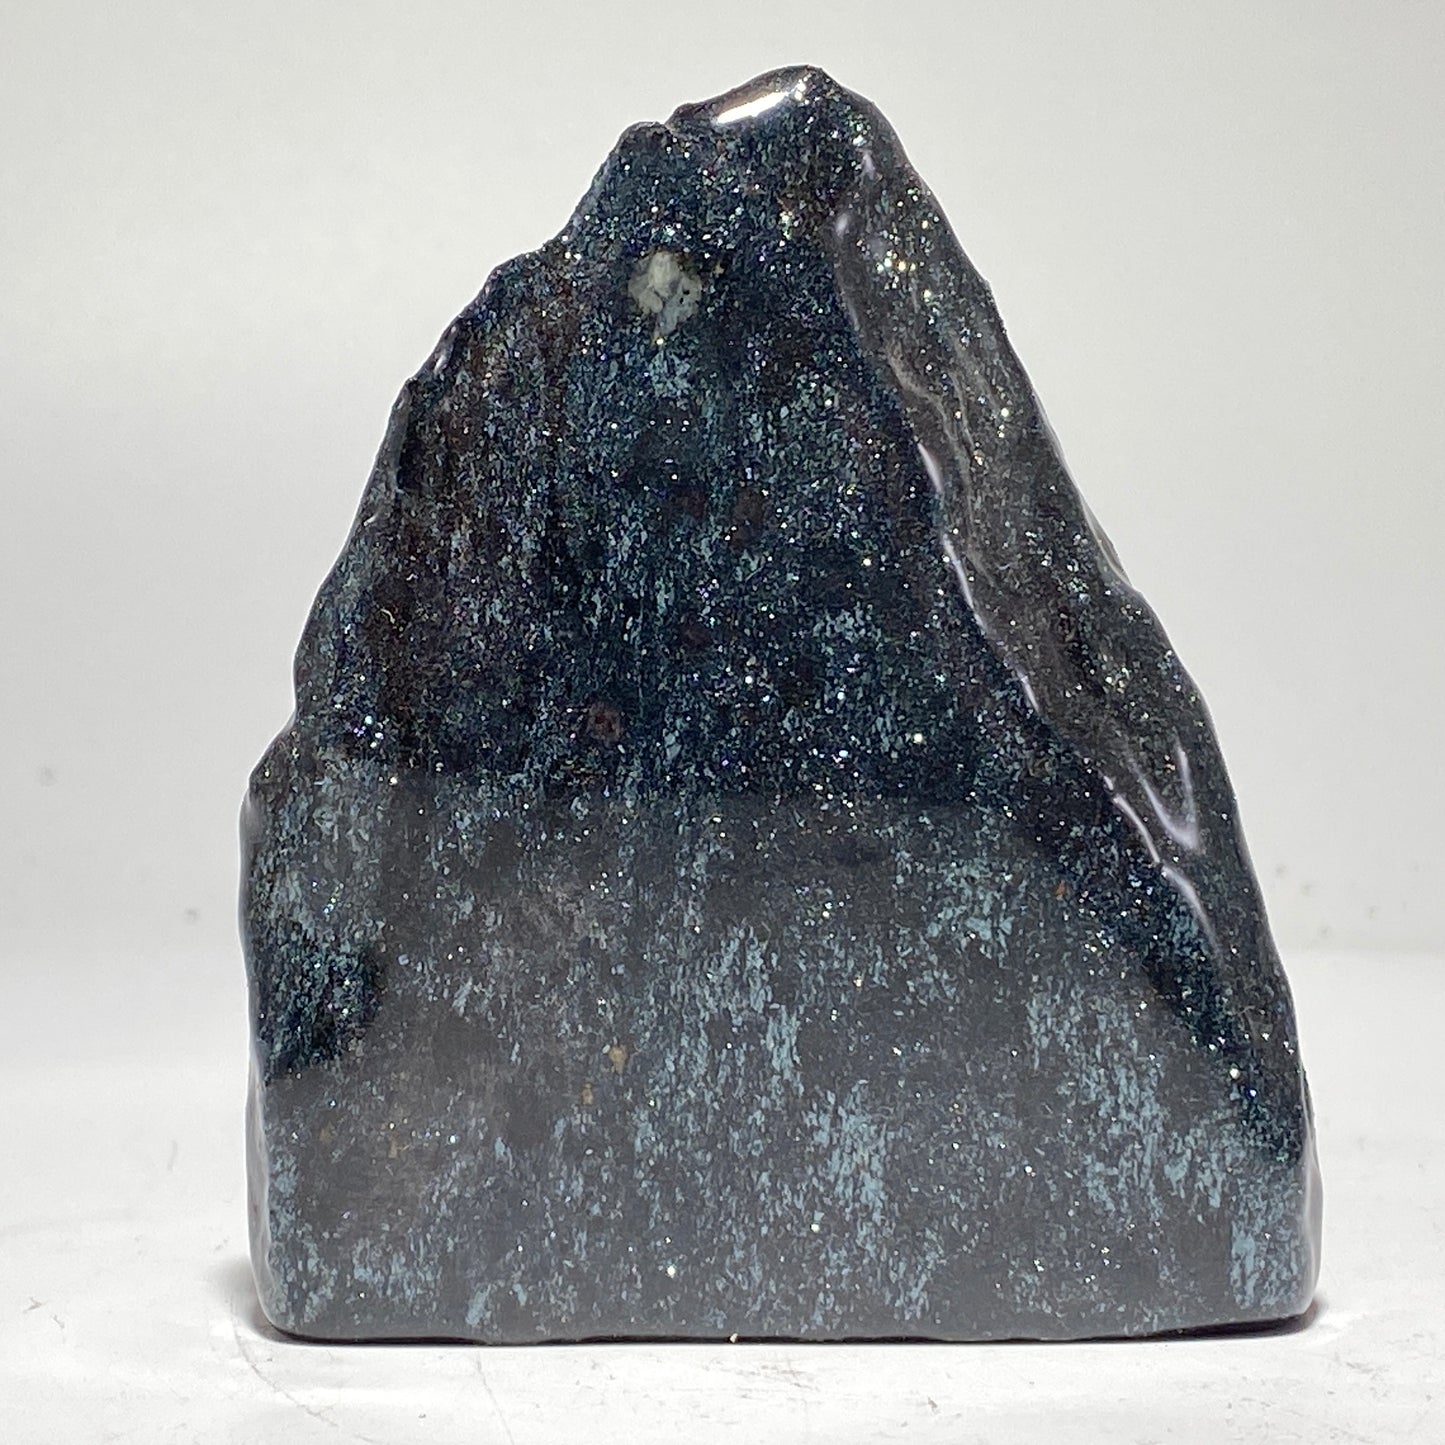 Specular Hematite freestanding cut base | iron ore, michigan iron ore, specularite, rock decor, michigan hematite, specularite specimen